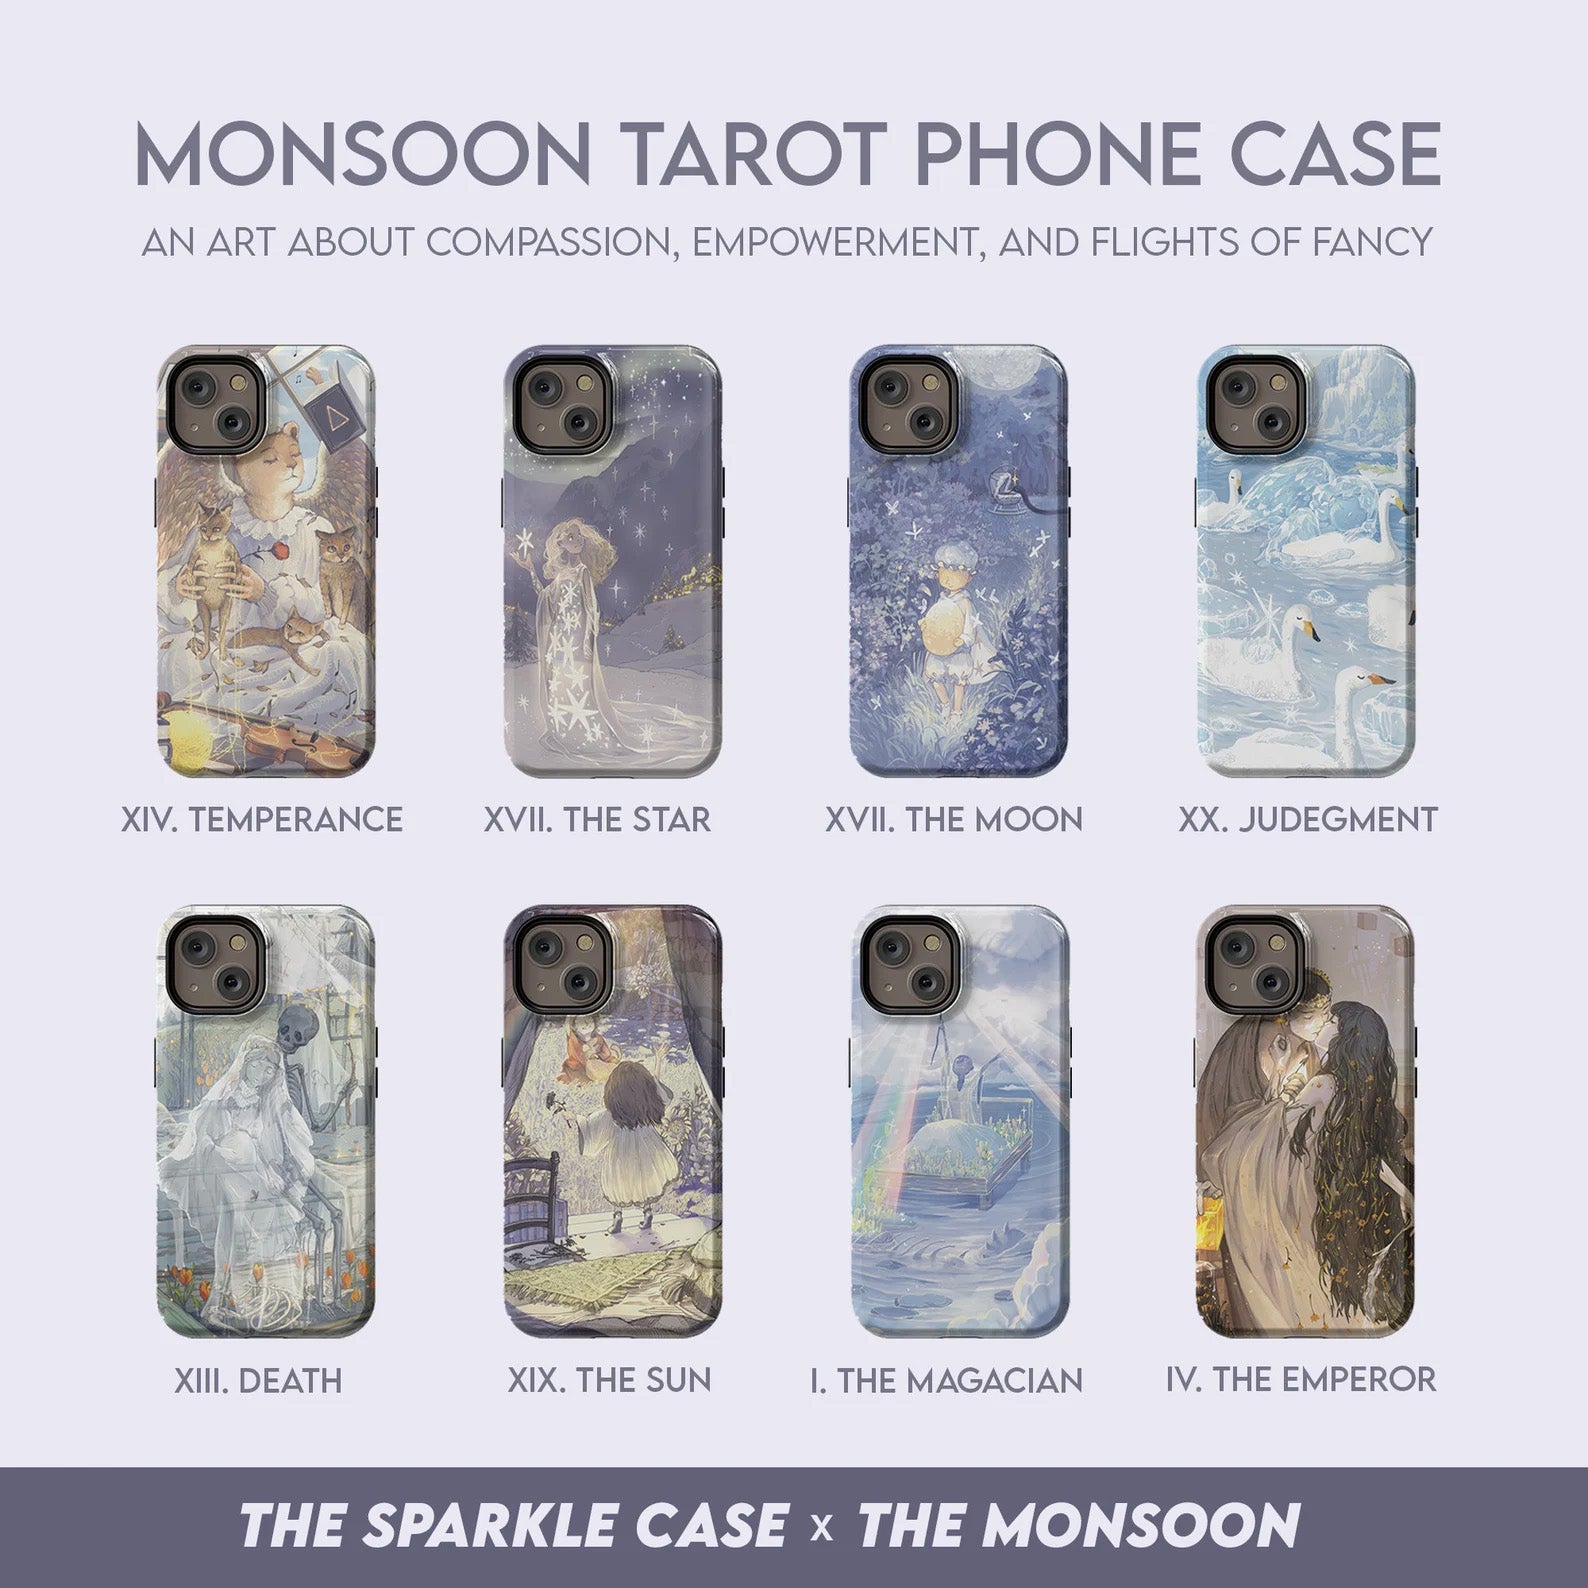 The Magician iPhone Case Samsung Case Monsoon Tarot